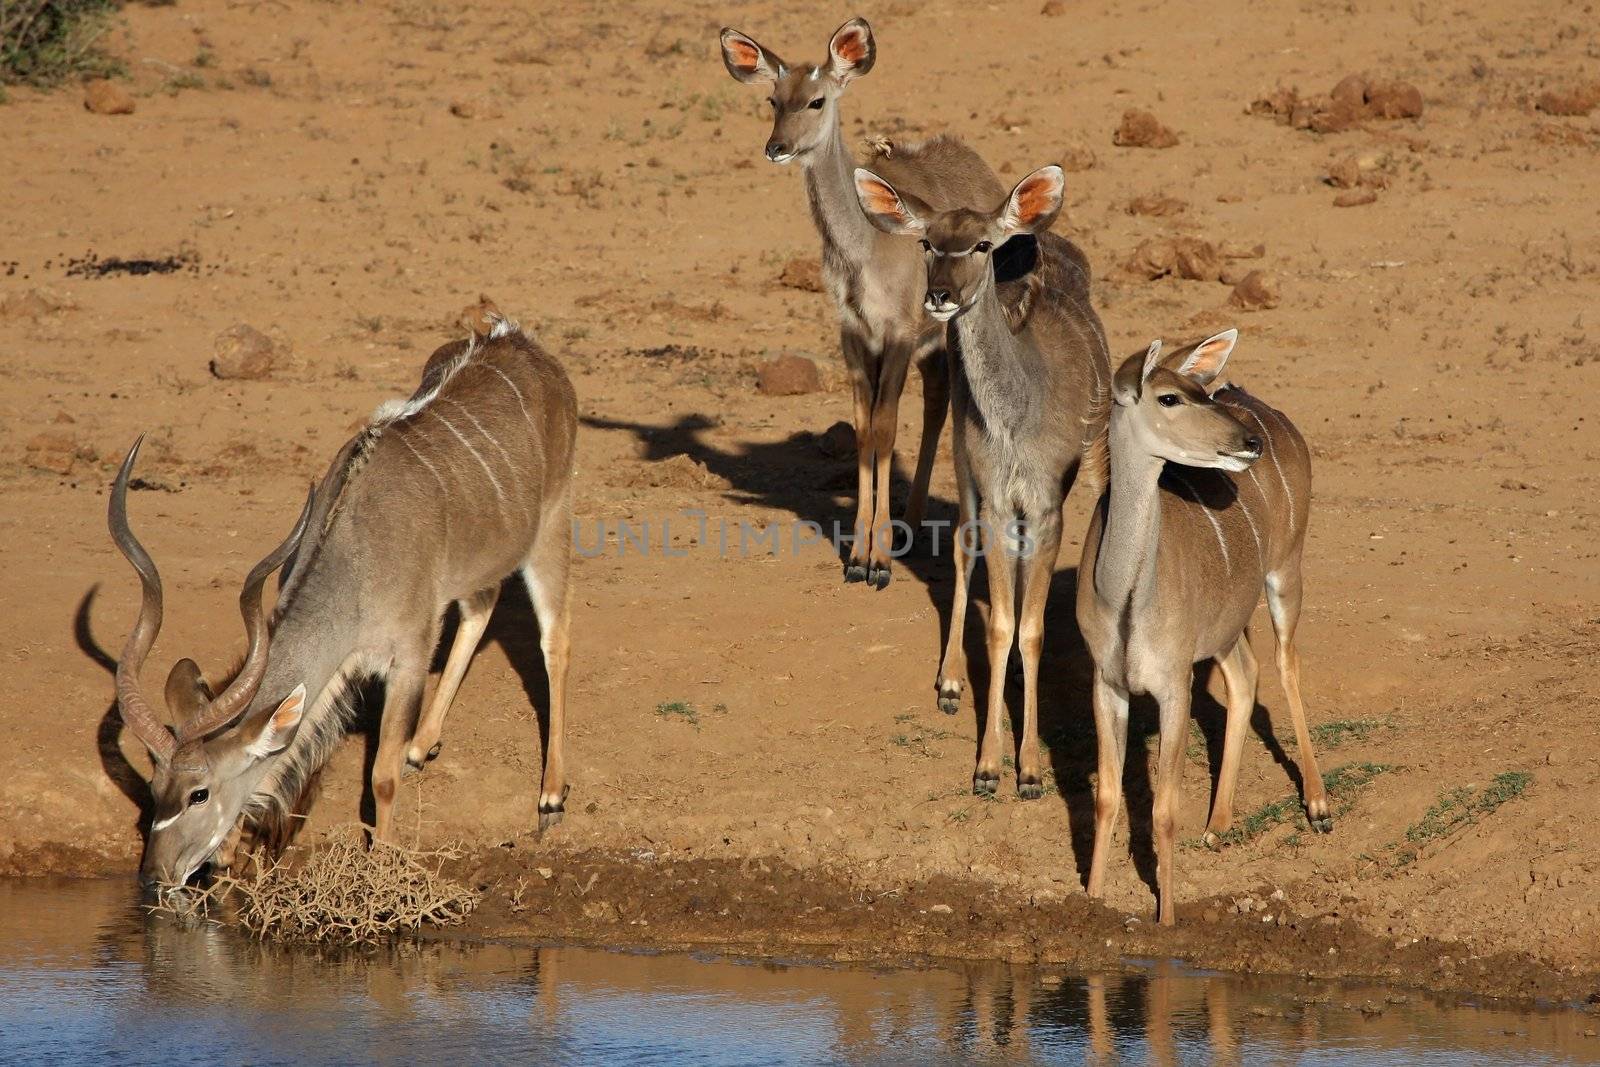 Male kudu antelope drinking water while females keep a watch